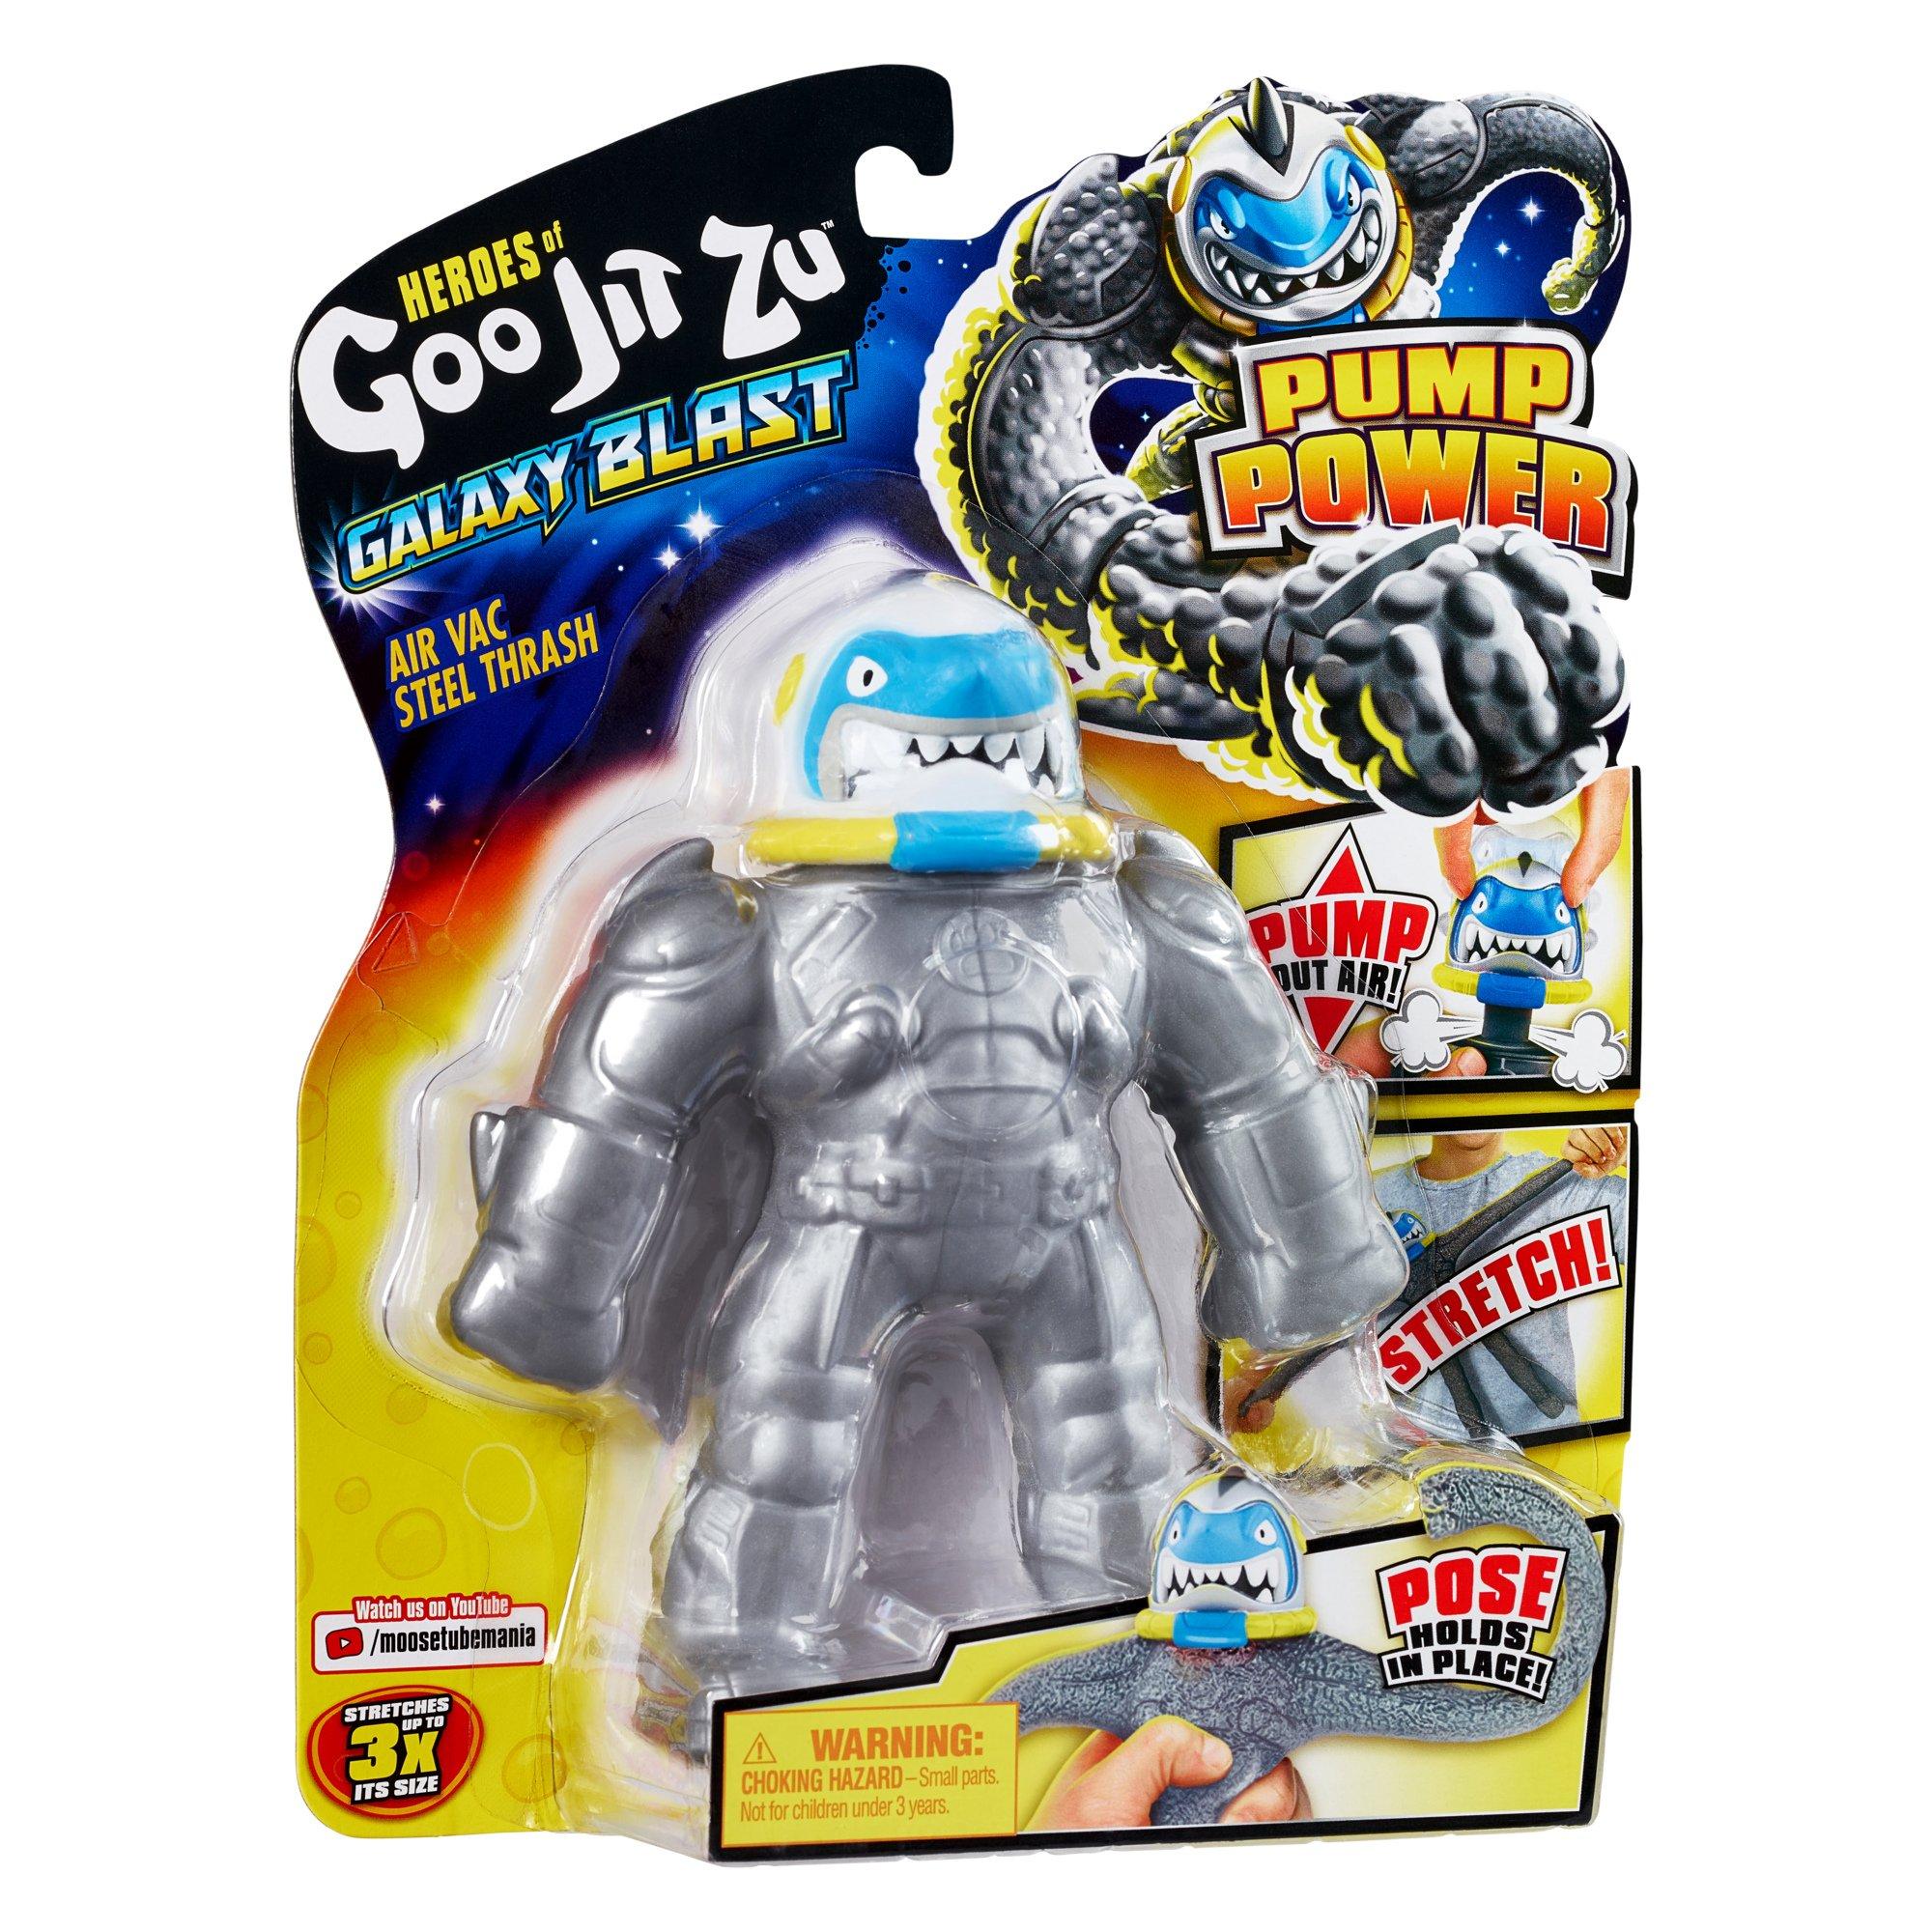 Heroes of Goo Jit Zu Galaxy Attack, Action Figure Pump Power - Air Vac  Thrash 